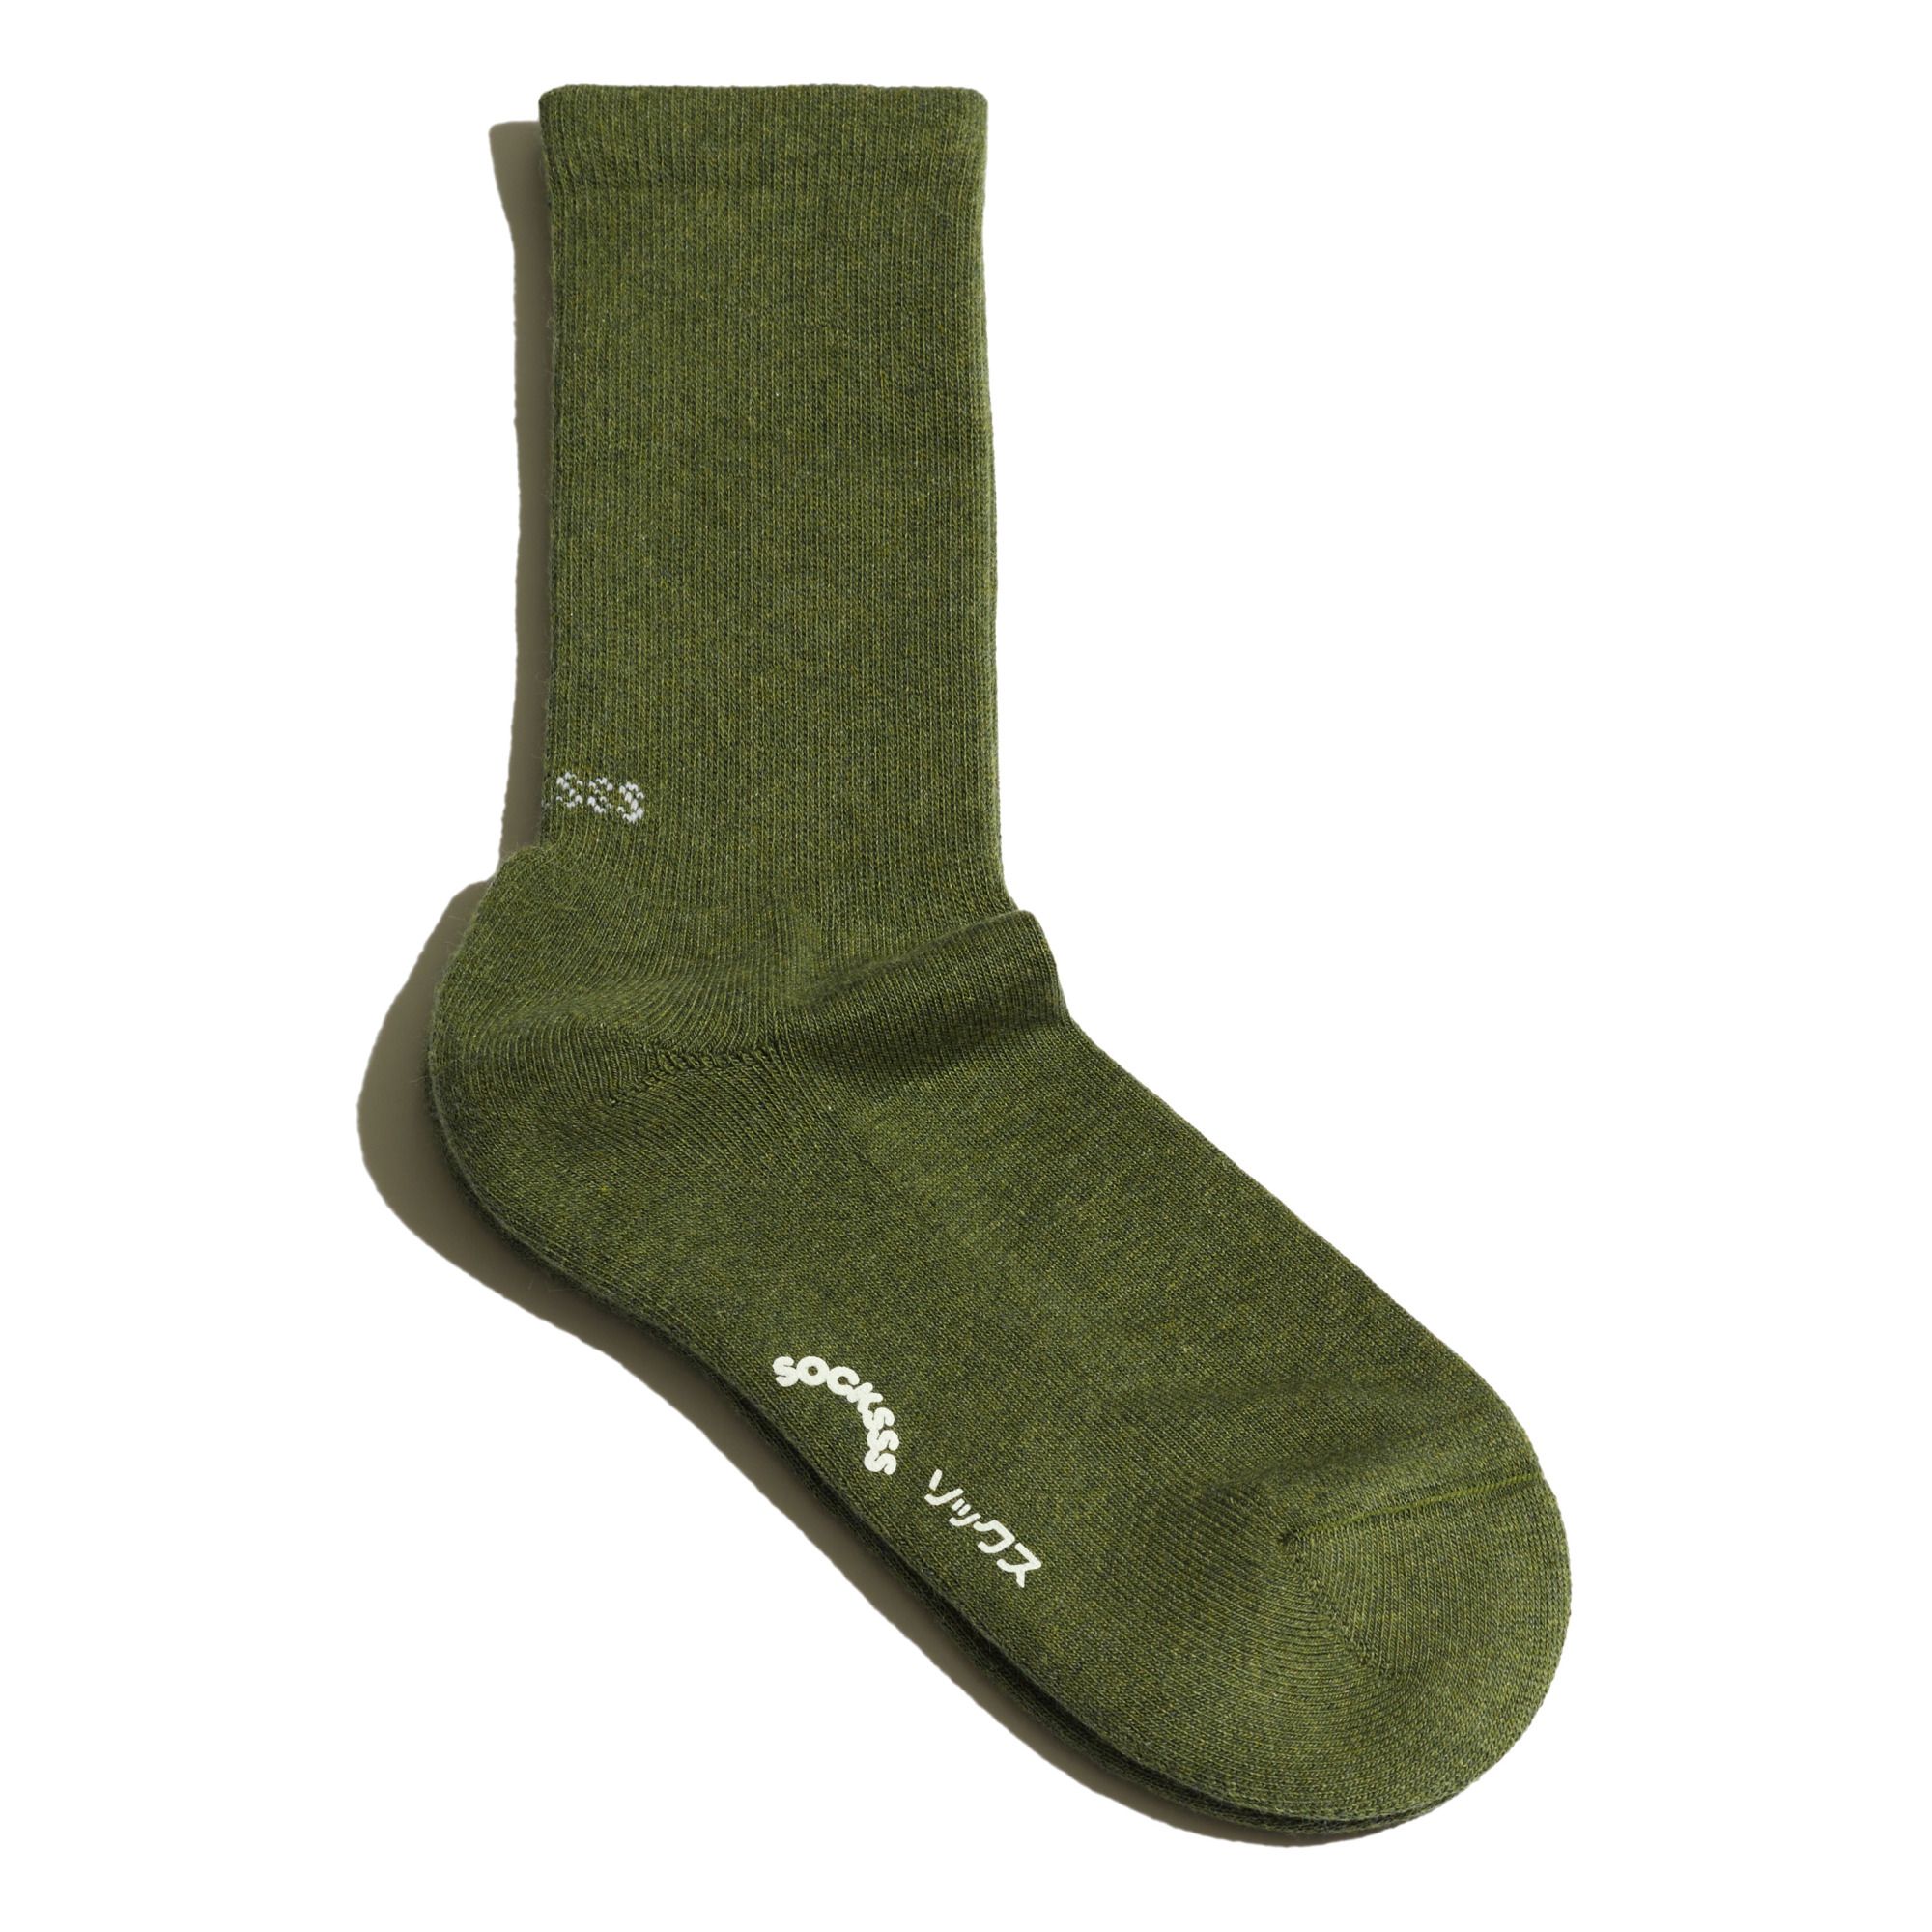 SOCKSSS - Chaussettes Mirkwood Coton Bio - Femme - Vert kaki